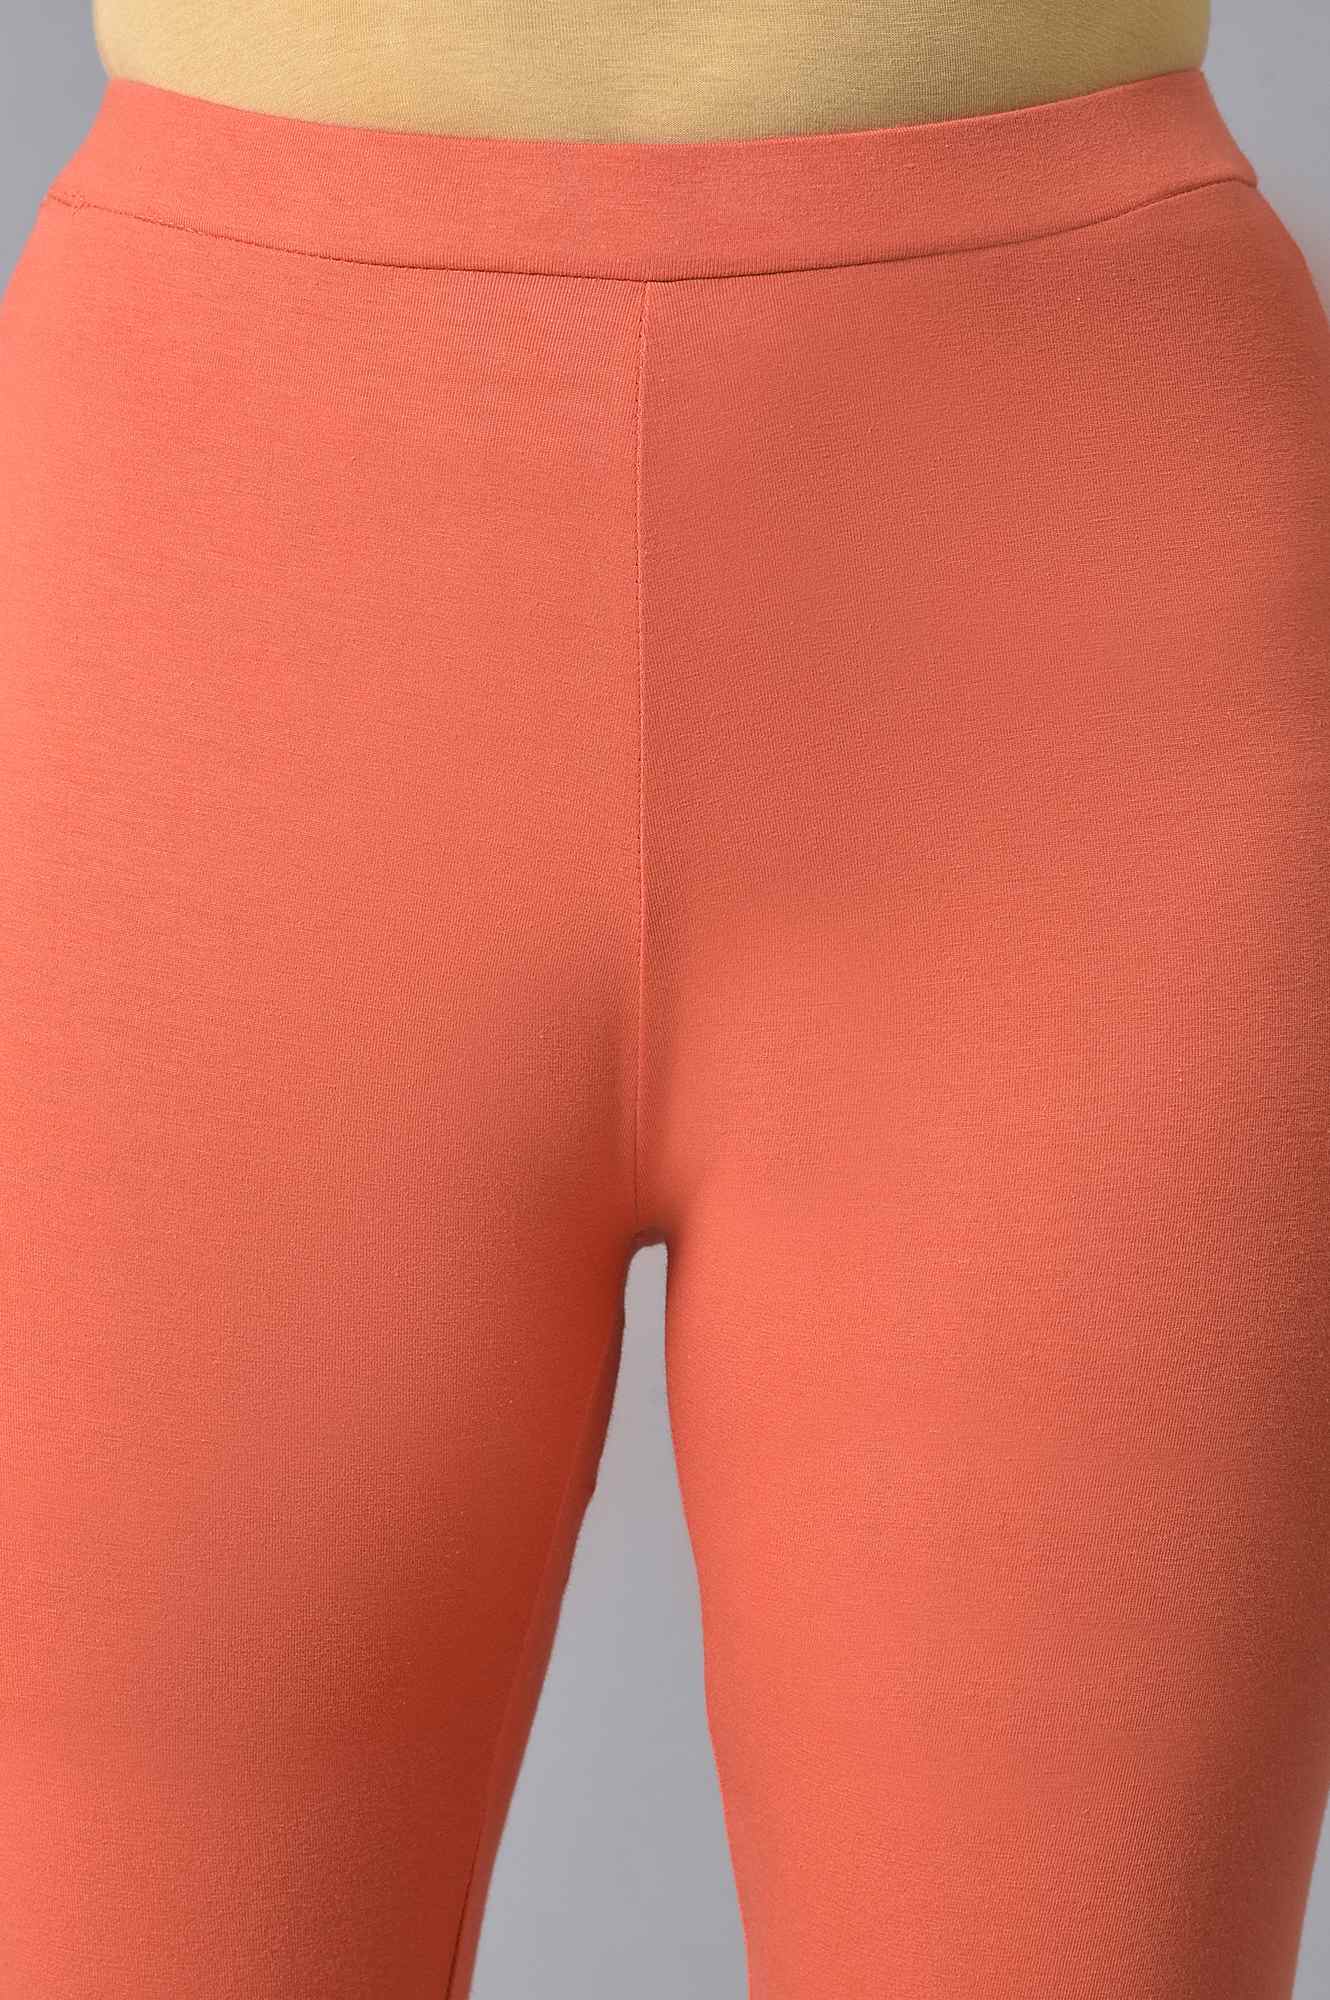 Orange Solid Cotton Tights